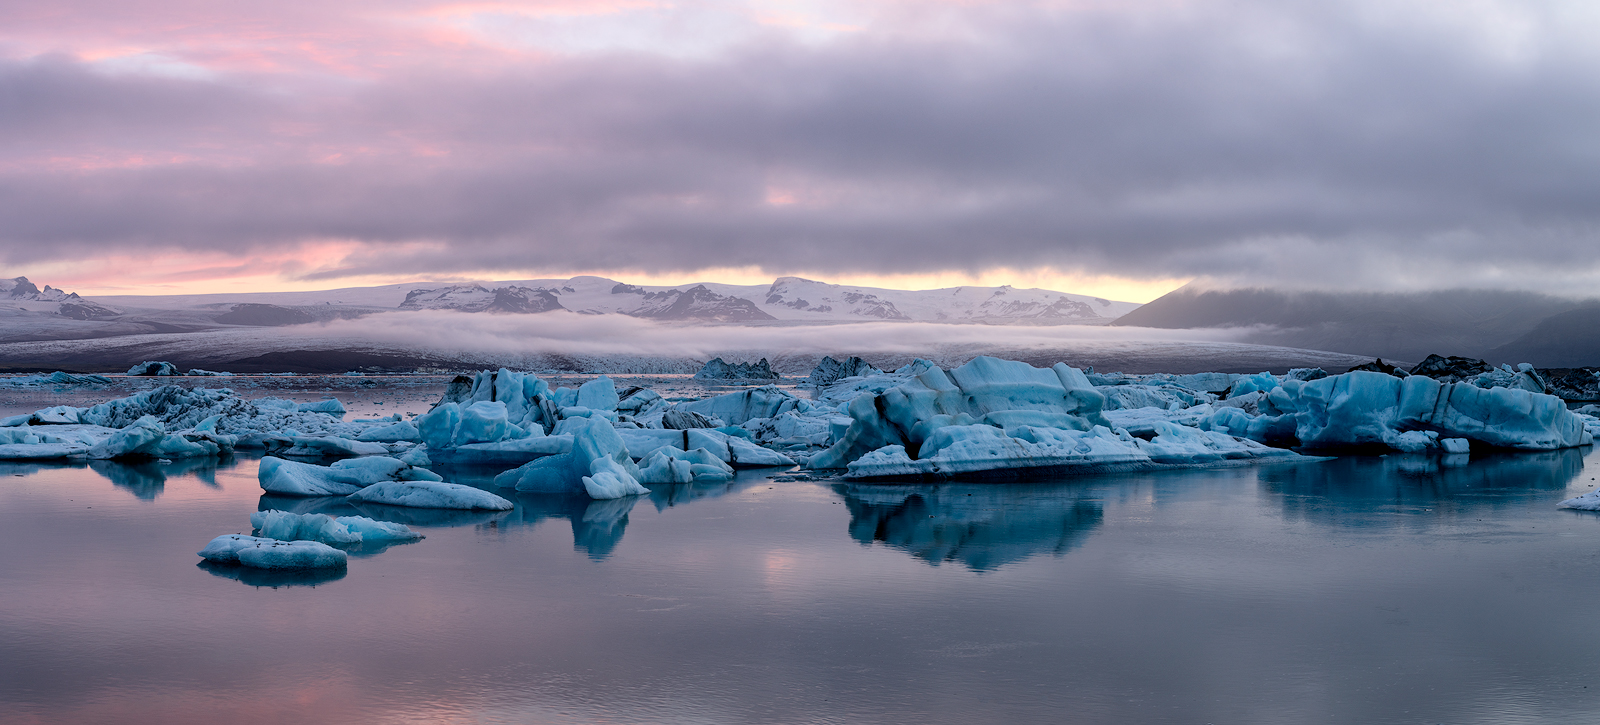 Iceland, Jokulsarlon, Ice Beach, Iceberg, Black Sand, Waves, Motion, Water Motion, Sunset, Cloudy, Bernard Chen, Timescapes